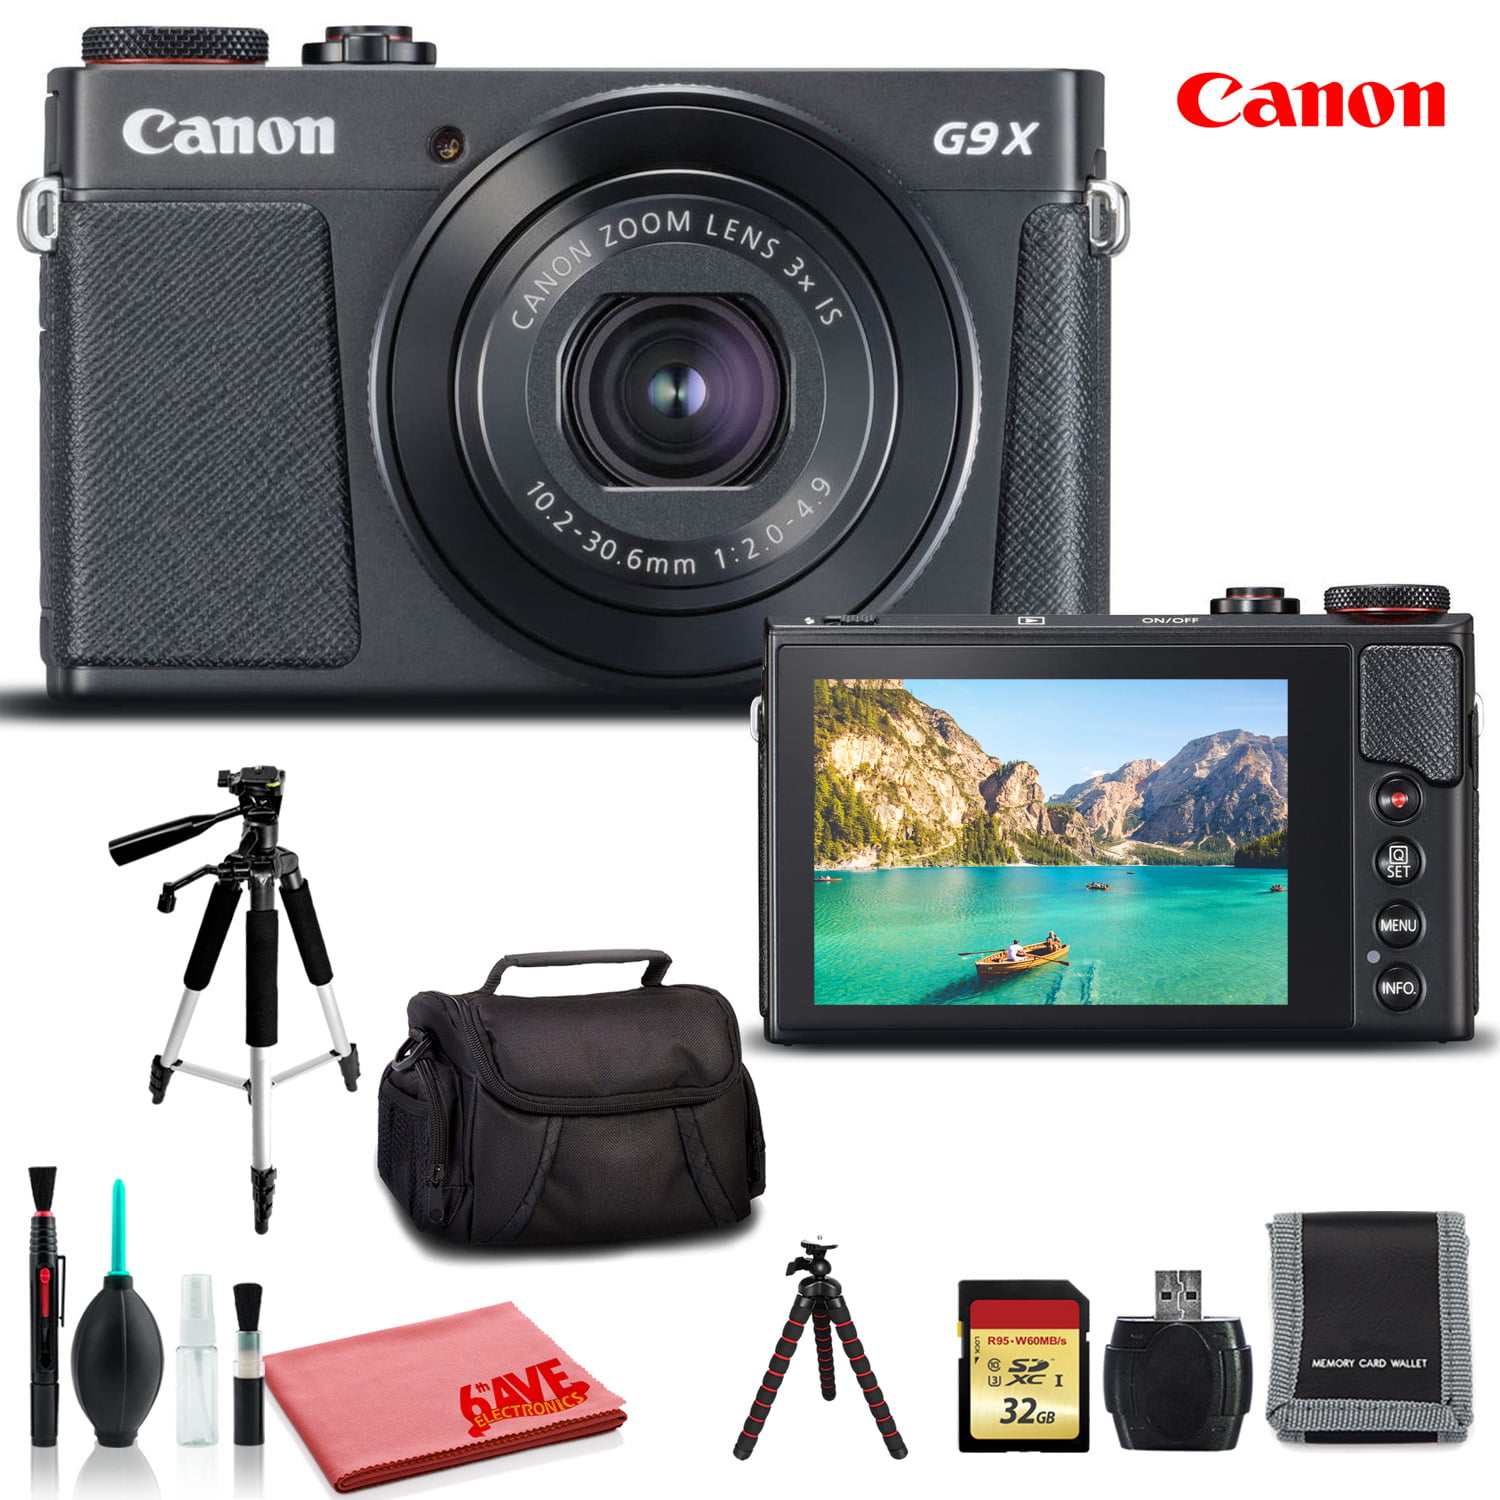 Canon PowerShot G9 X Mark II Digital Camera (Black) (International